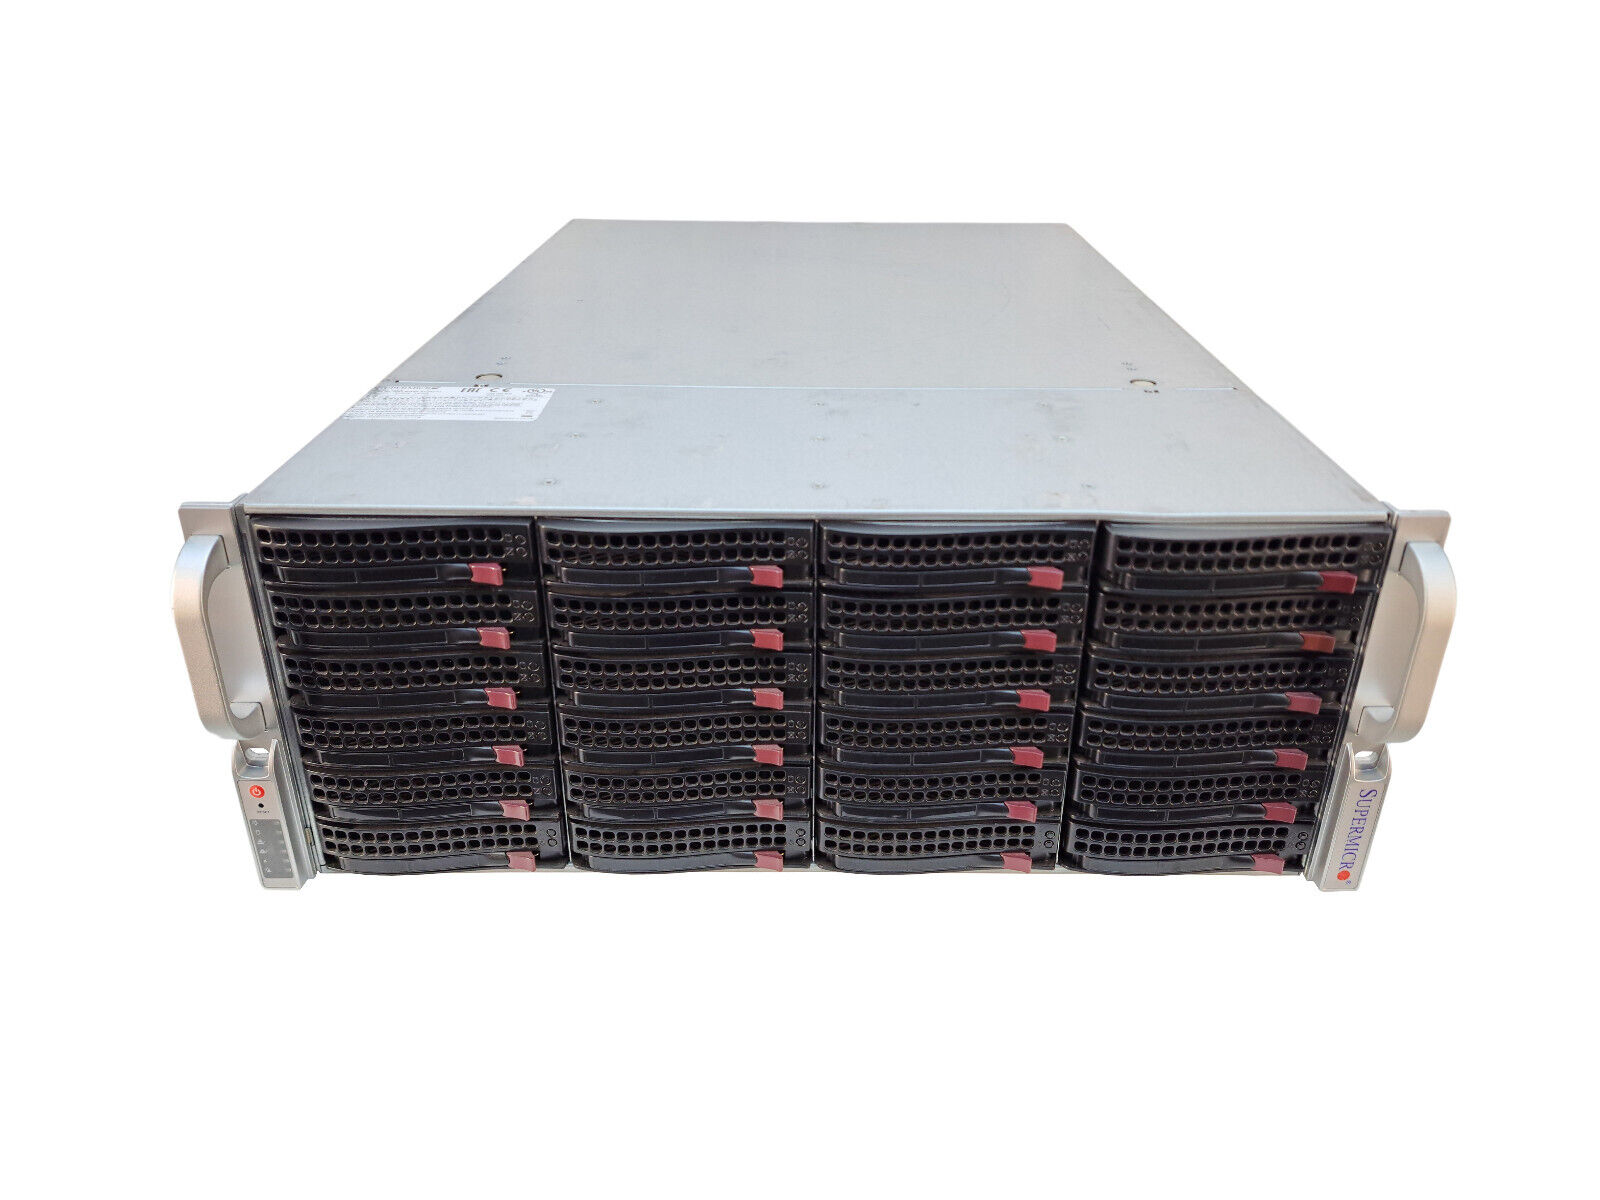 SuperMicro 4U CSE 846 24 Bay LFF Barebone Server Chassis 2x PWS-920P-SQ